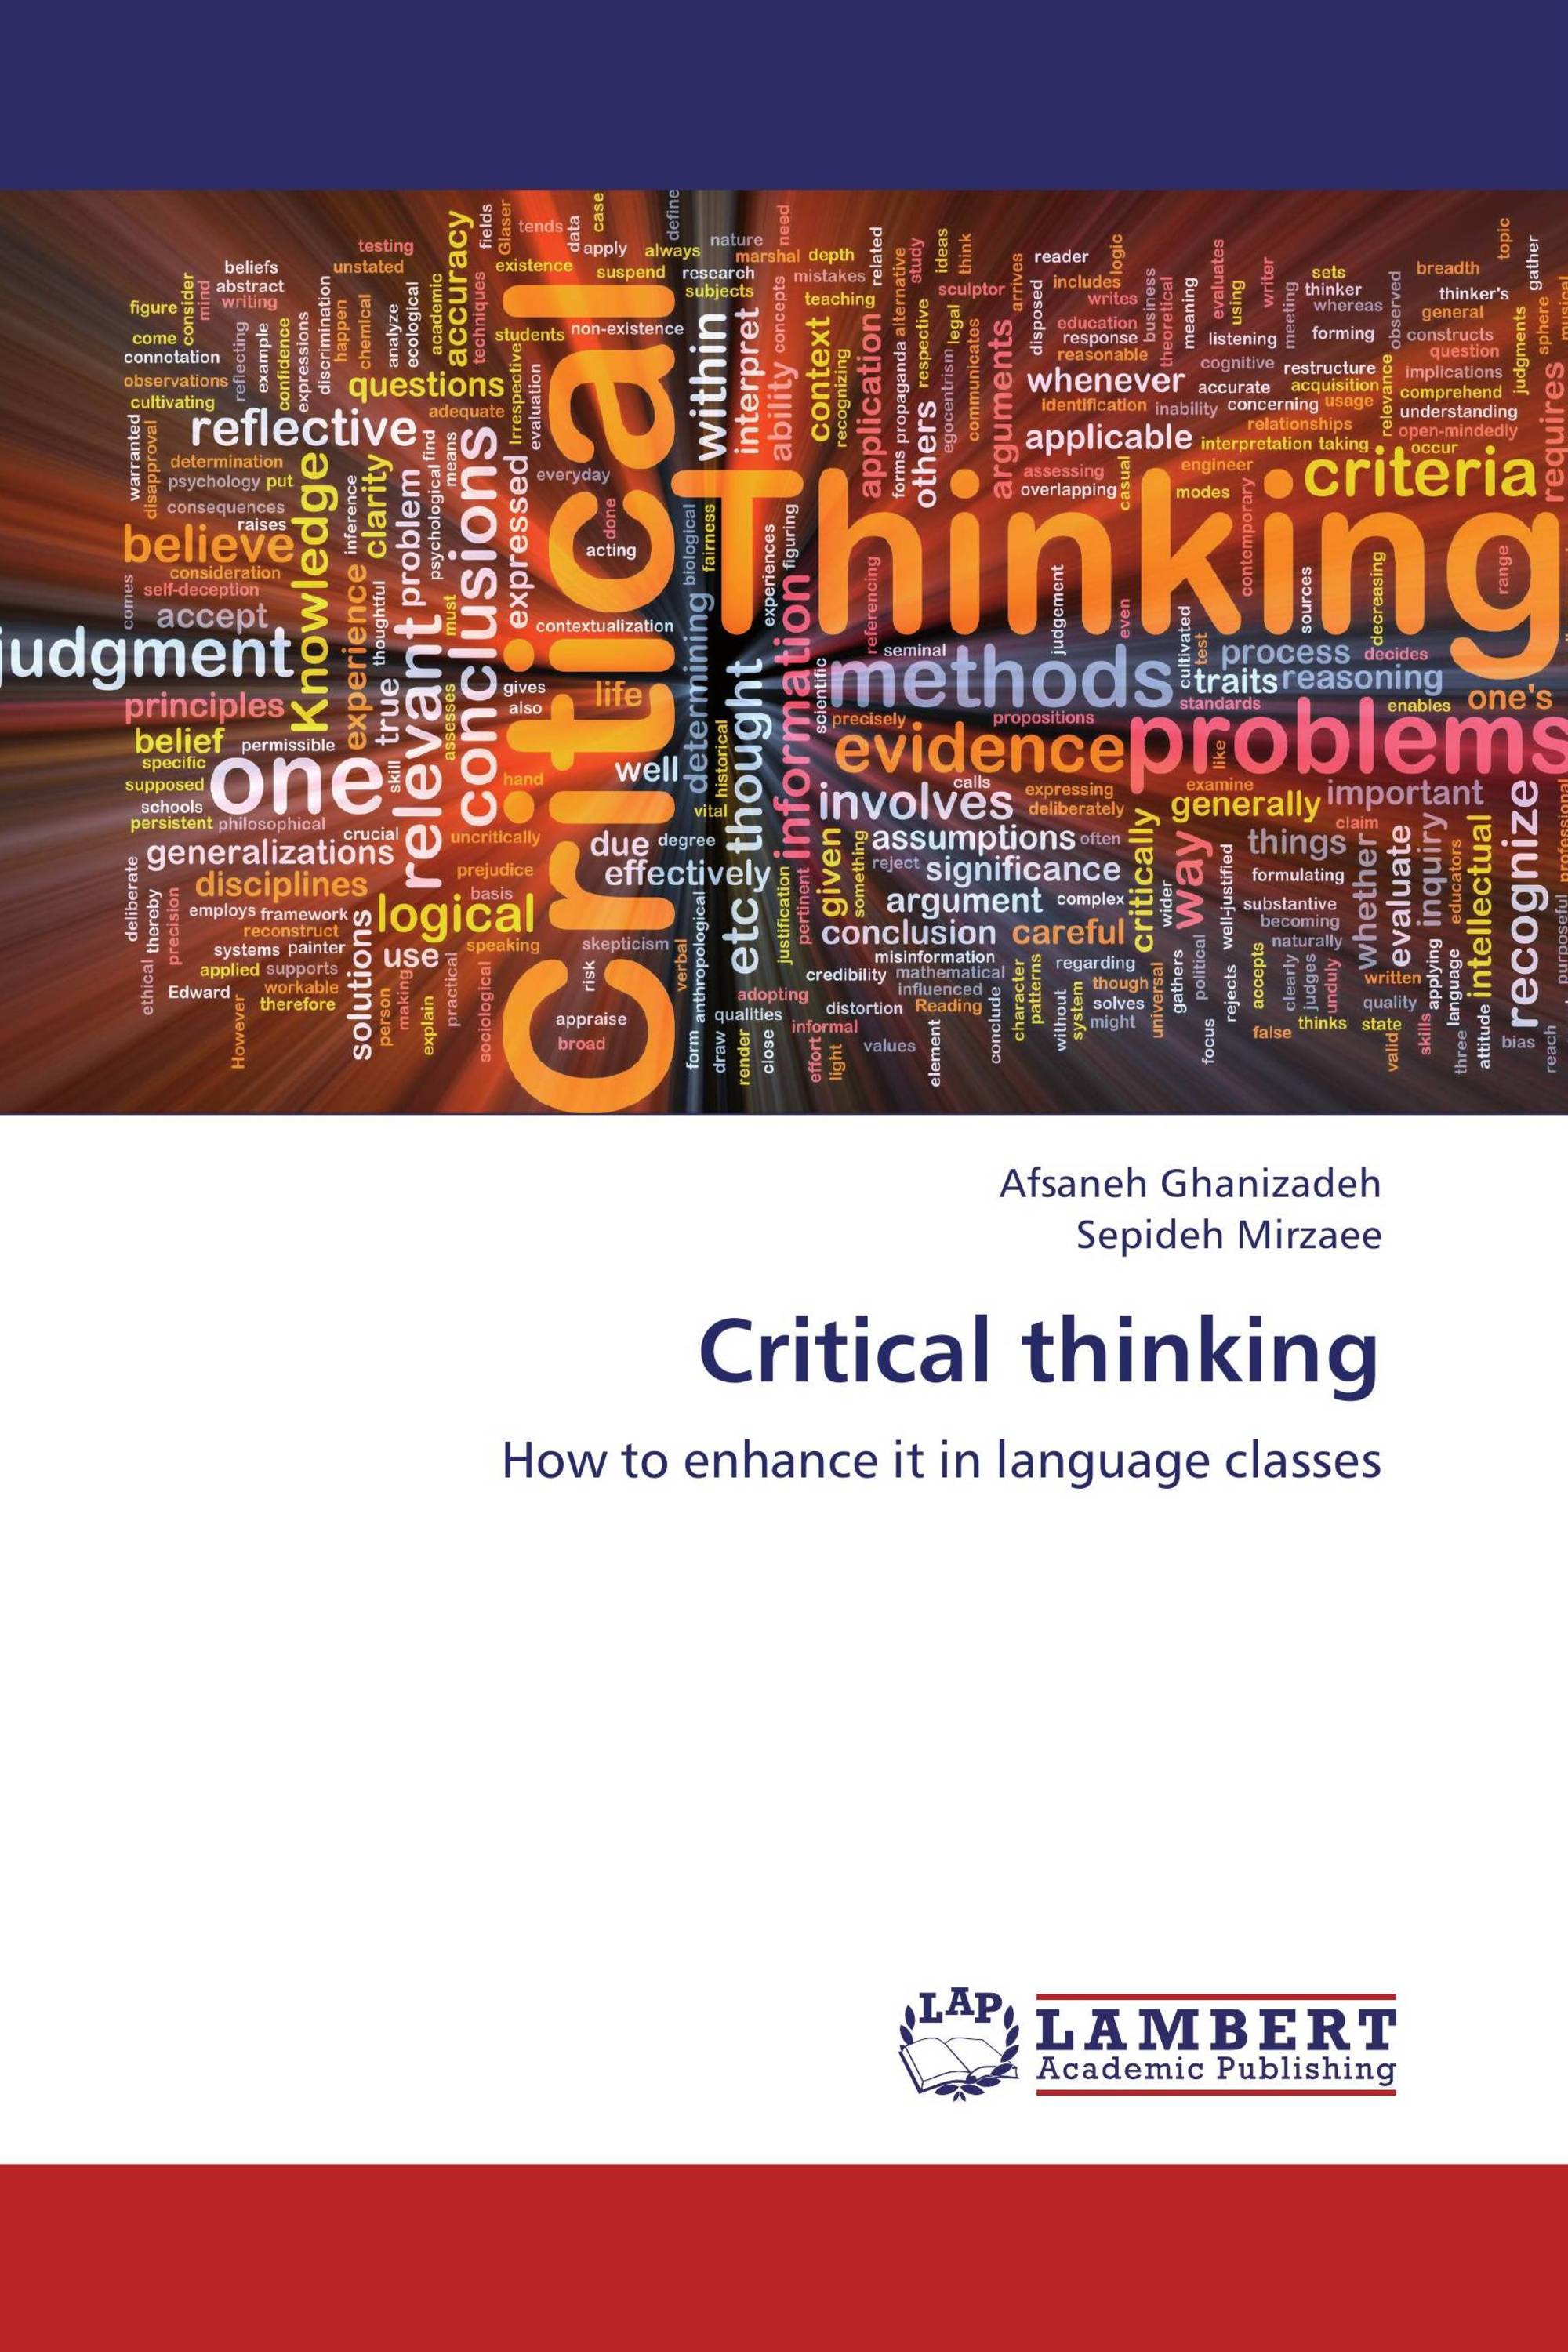 critical thinking cover photos